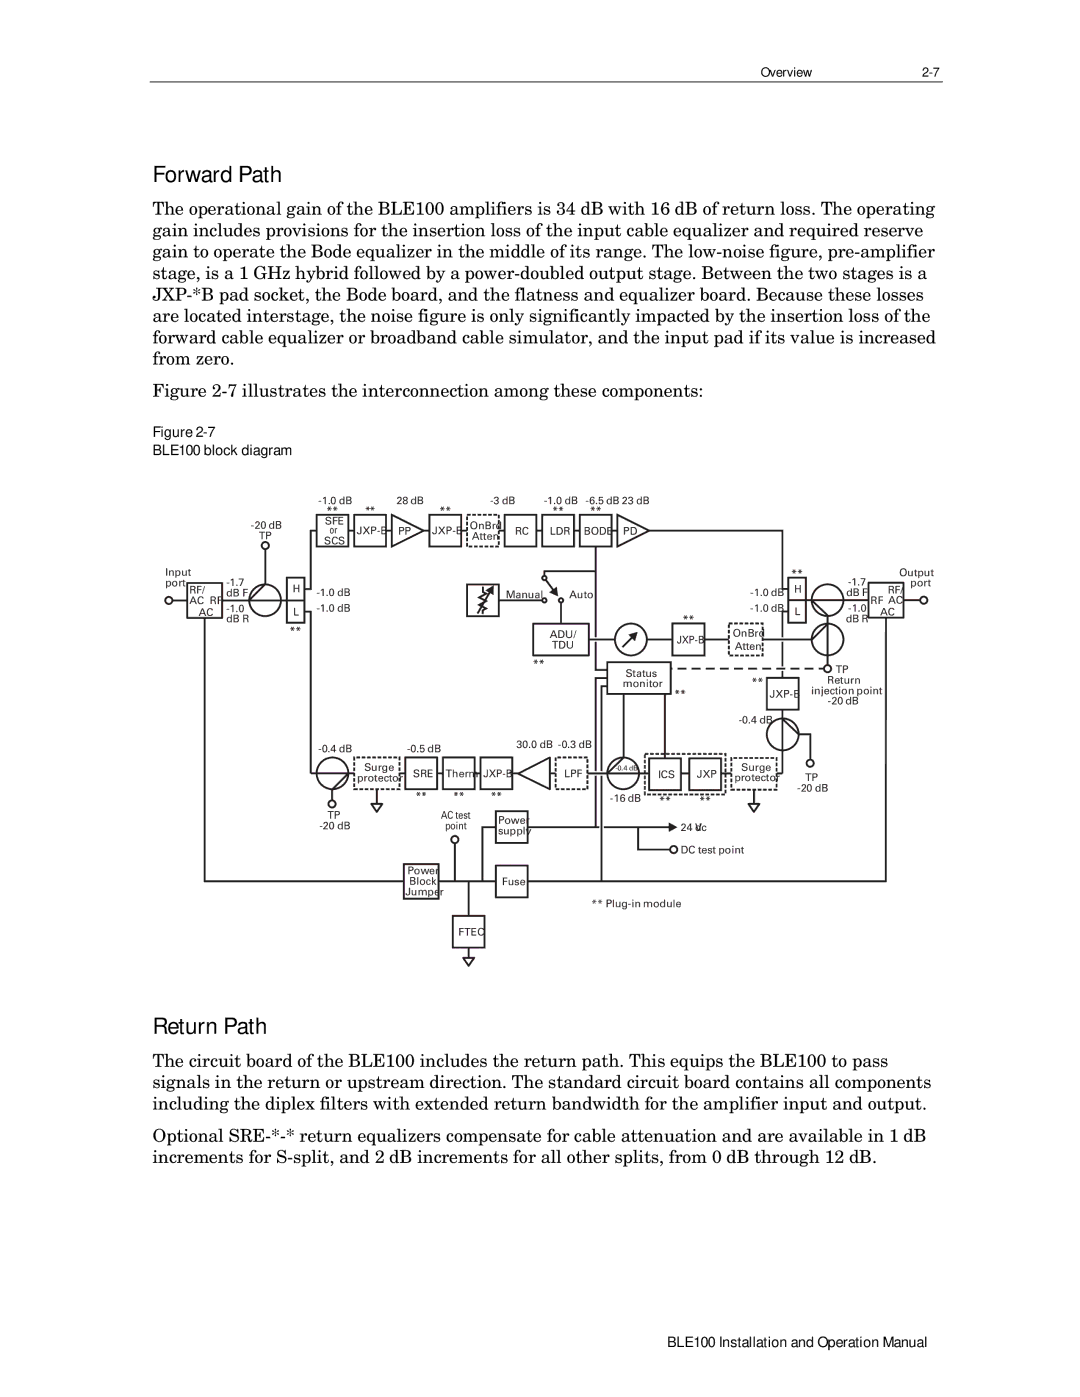 Motorola operation manual Forward Path, Return Path, BLE100 block diagram 